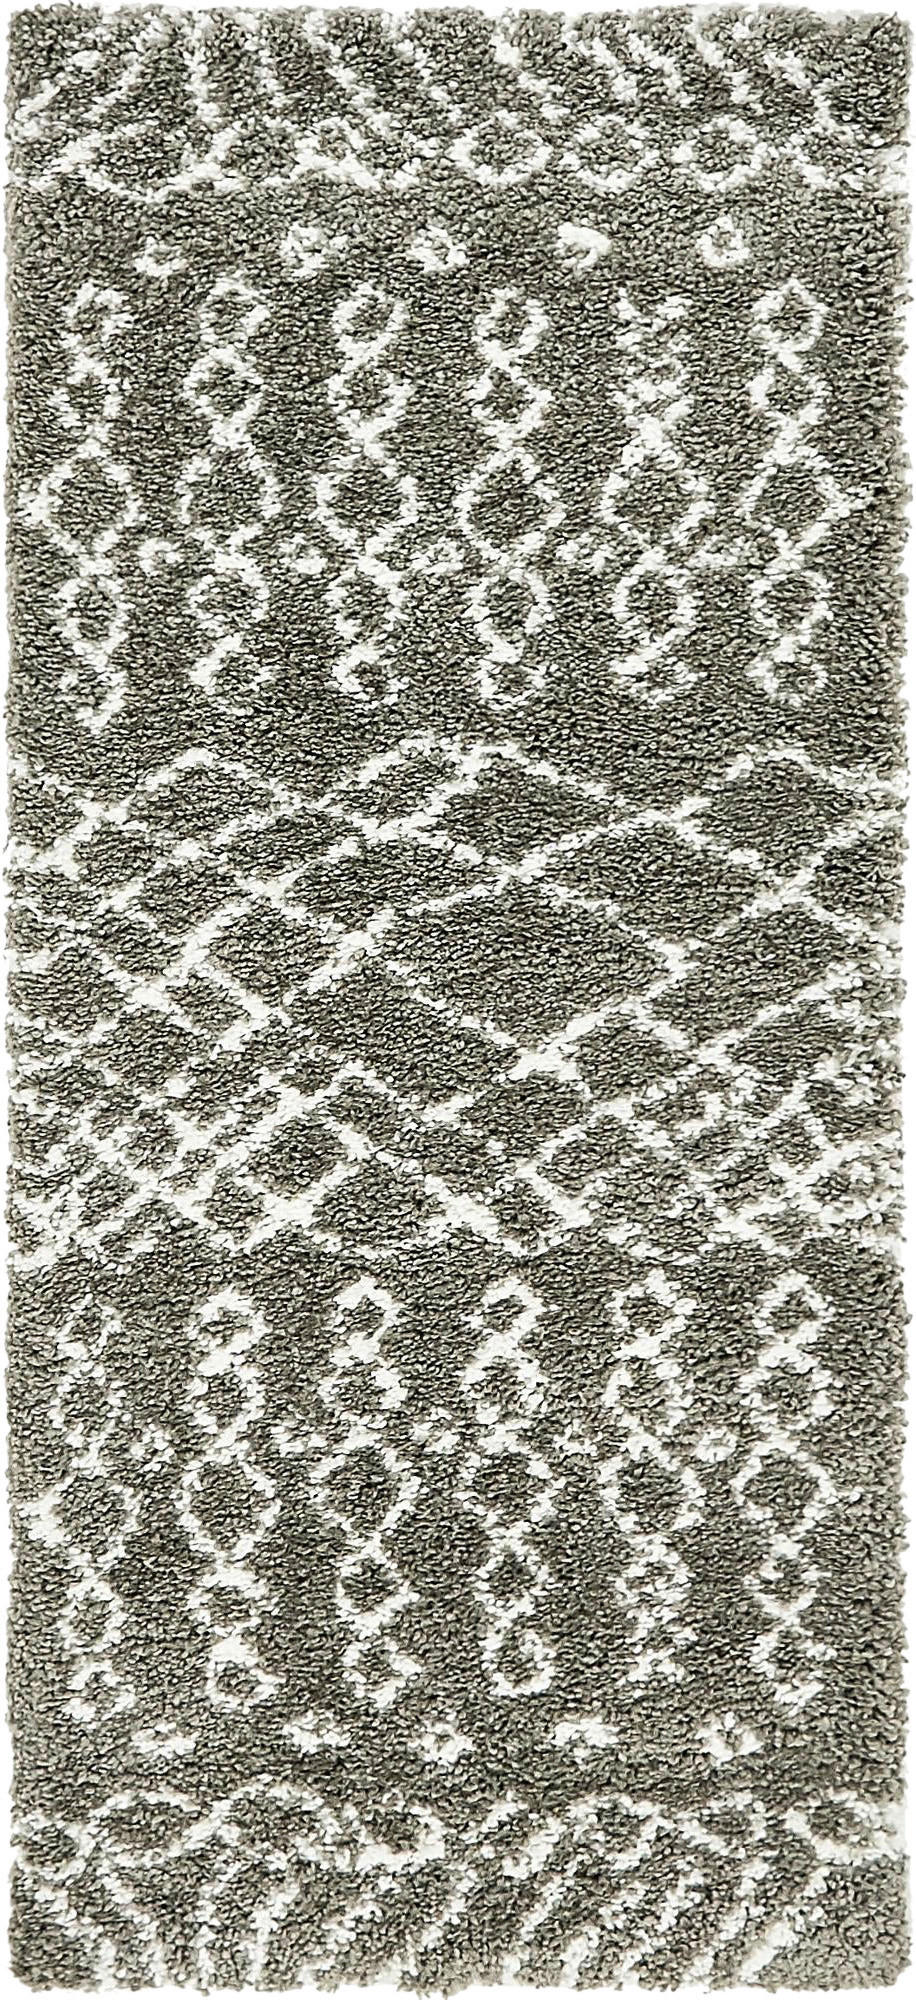 WEBTEPPICH 80/185 cm  - Grau, Basics, Textil (80/185cm)